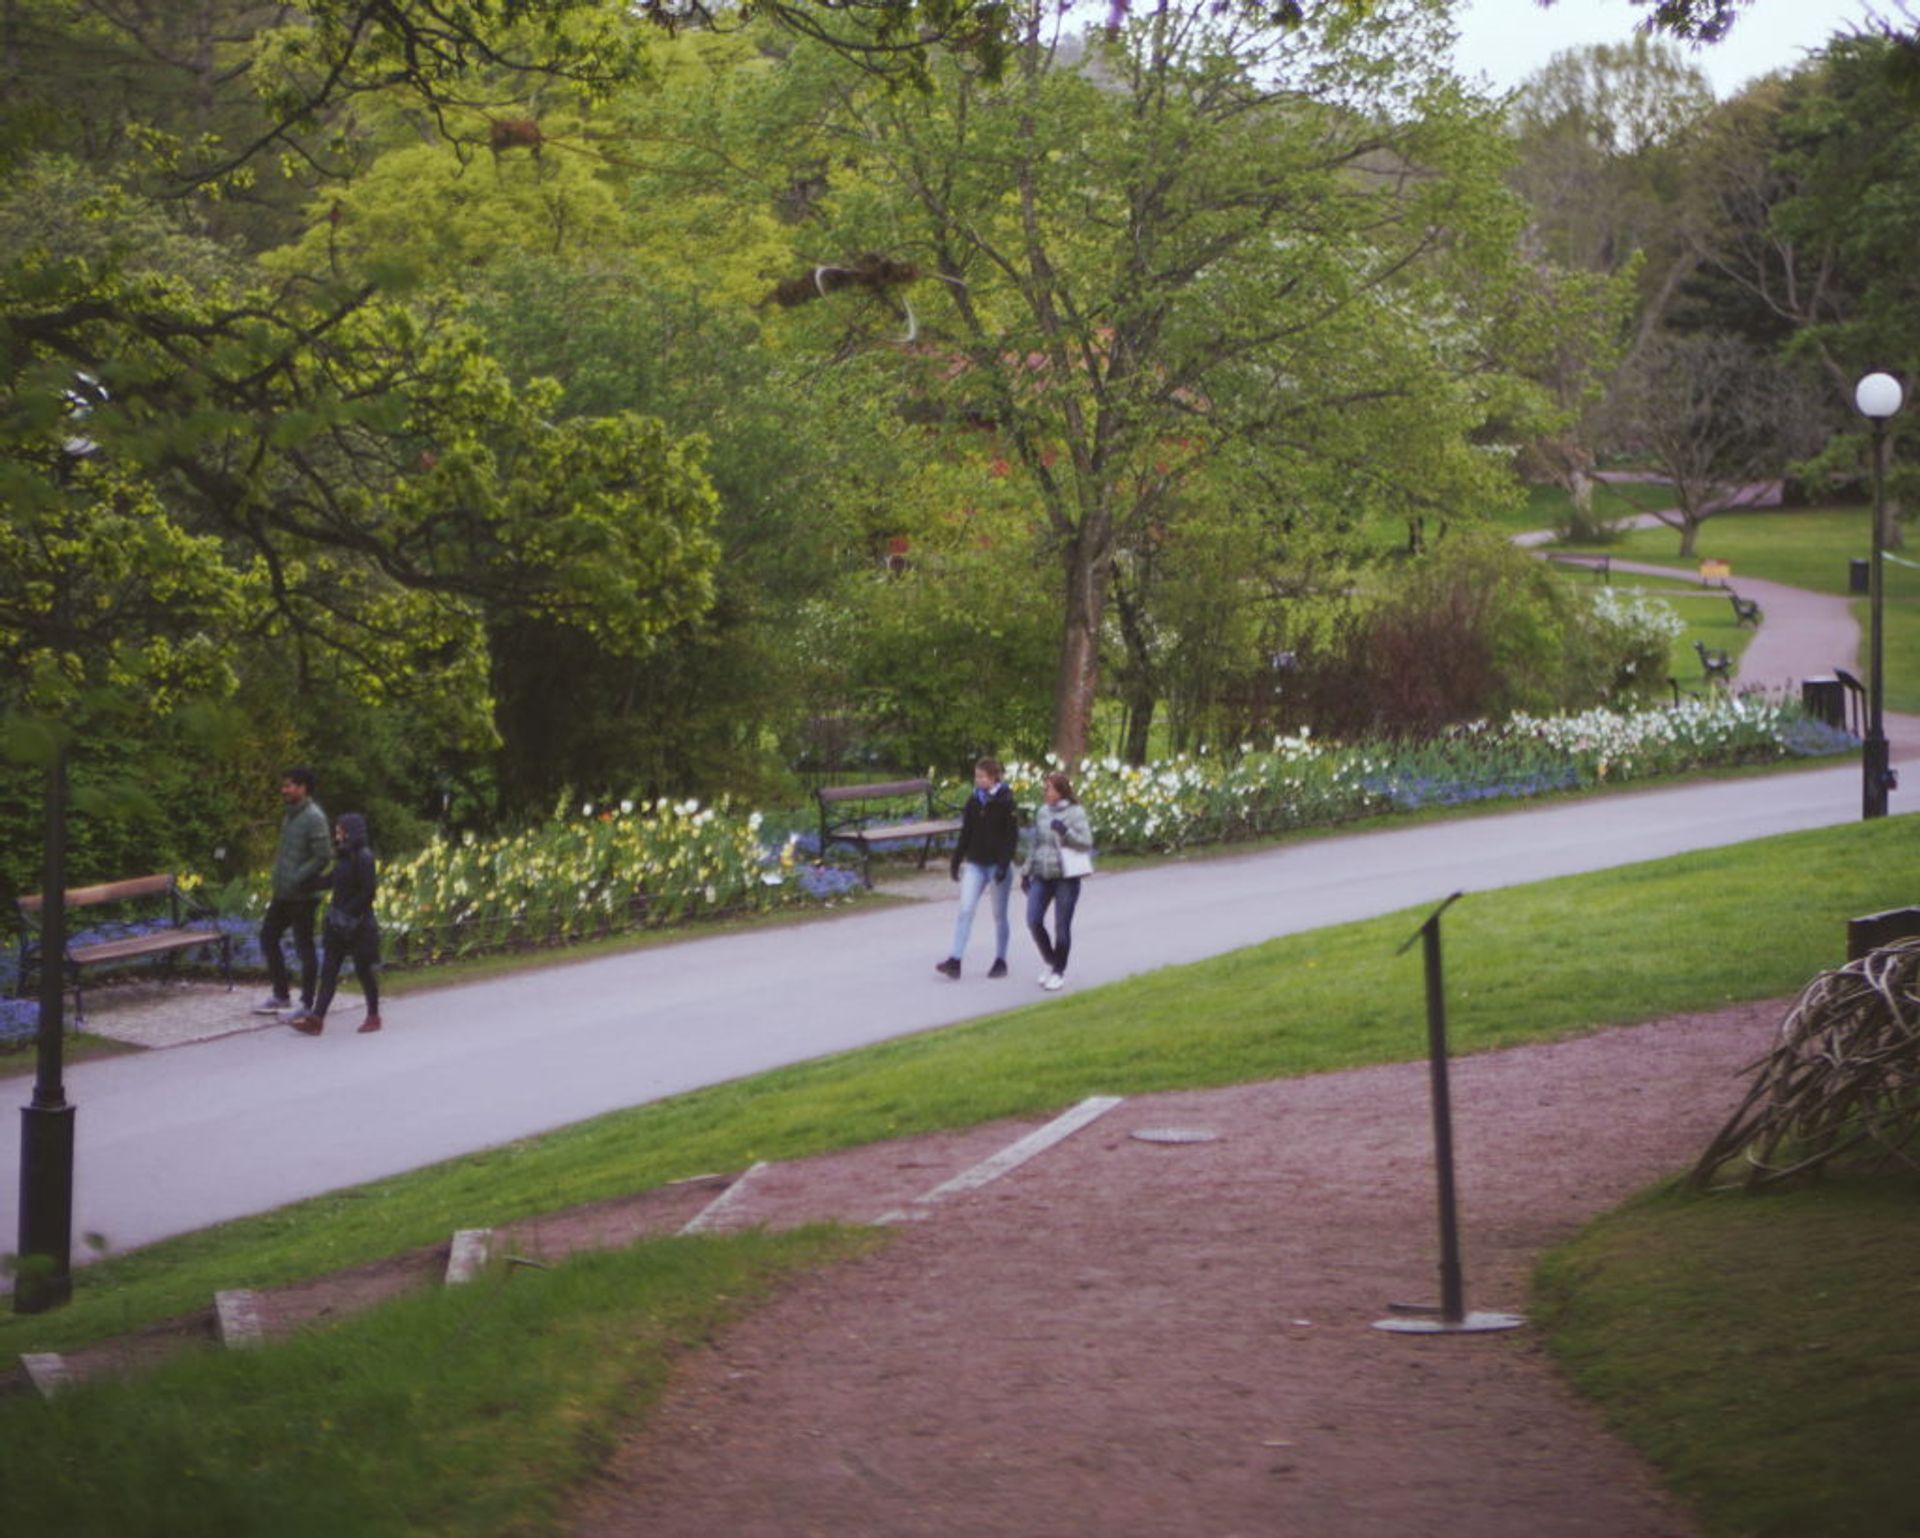 People walking through a park.